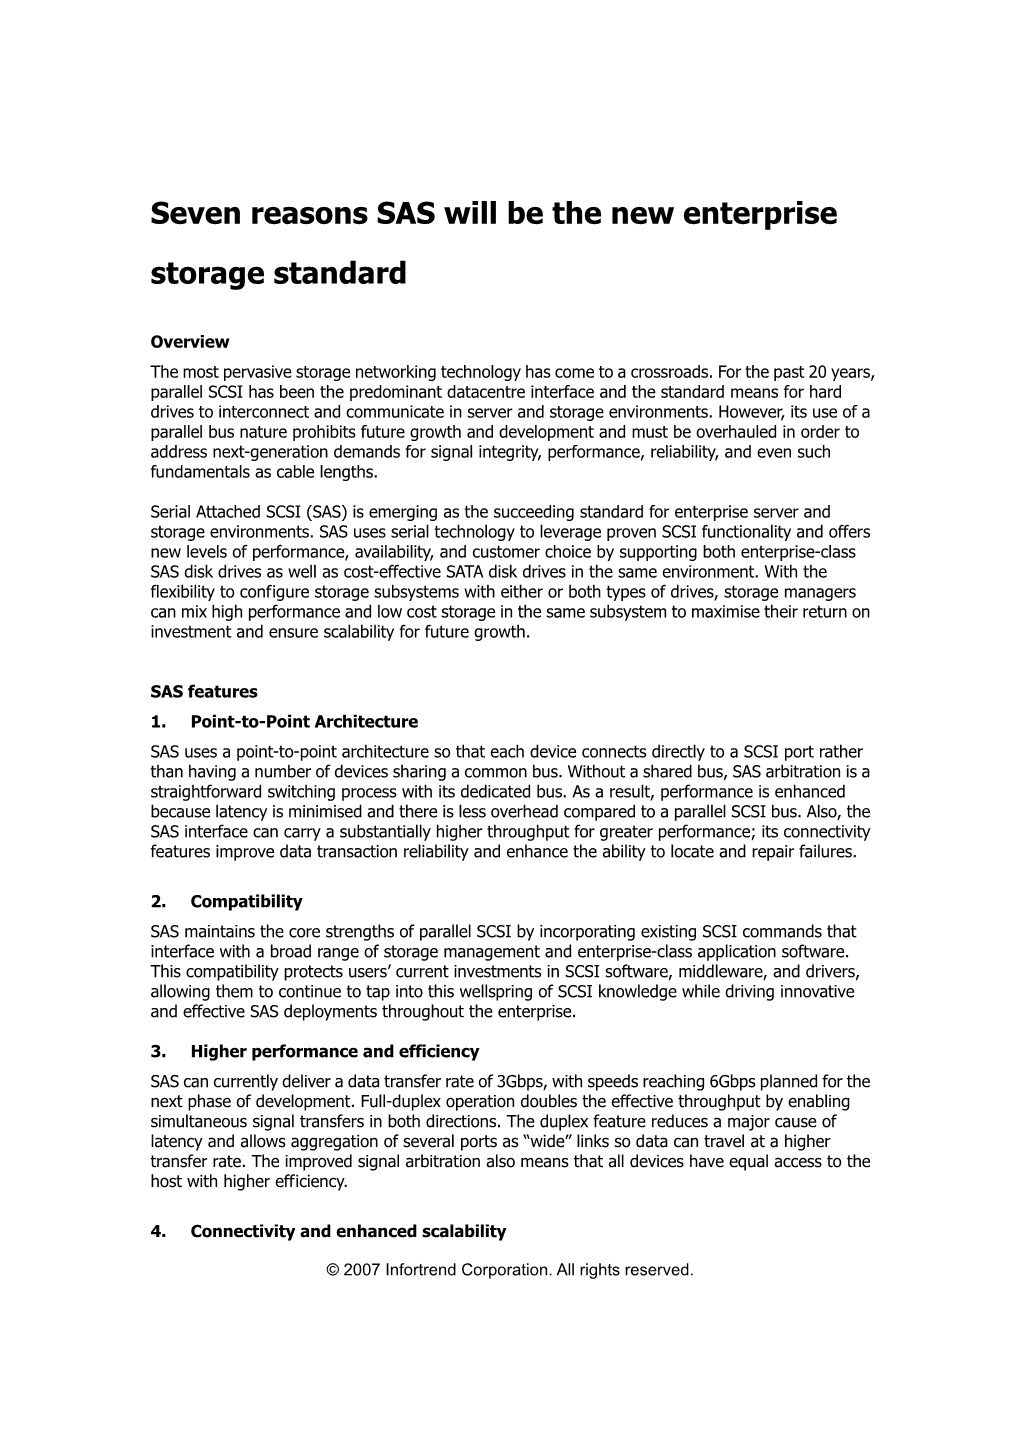 Seven Reasons SAS Will Be the New Enterprise Storage Standard